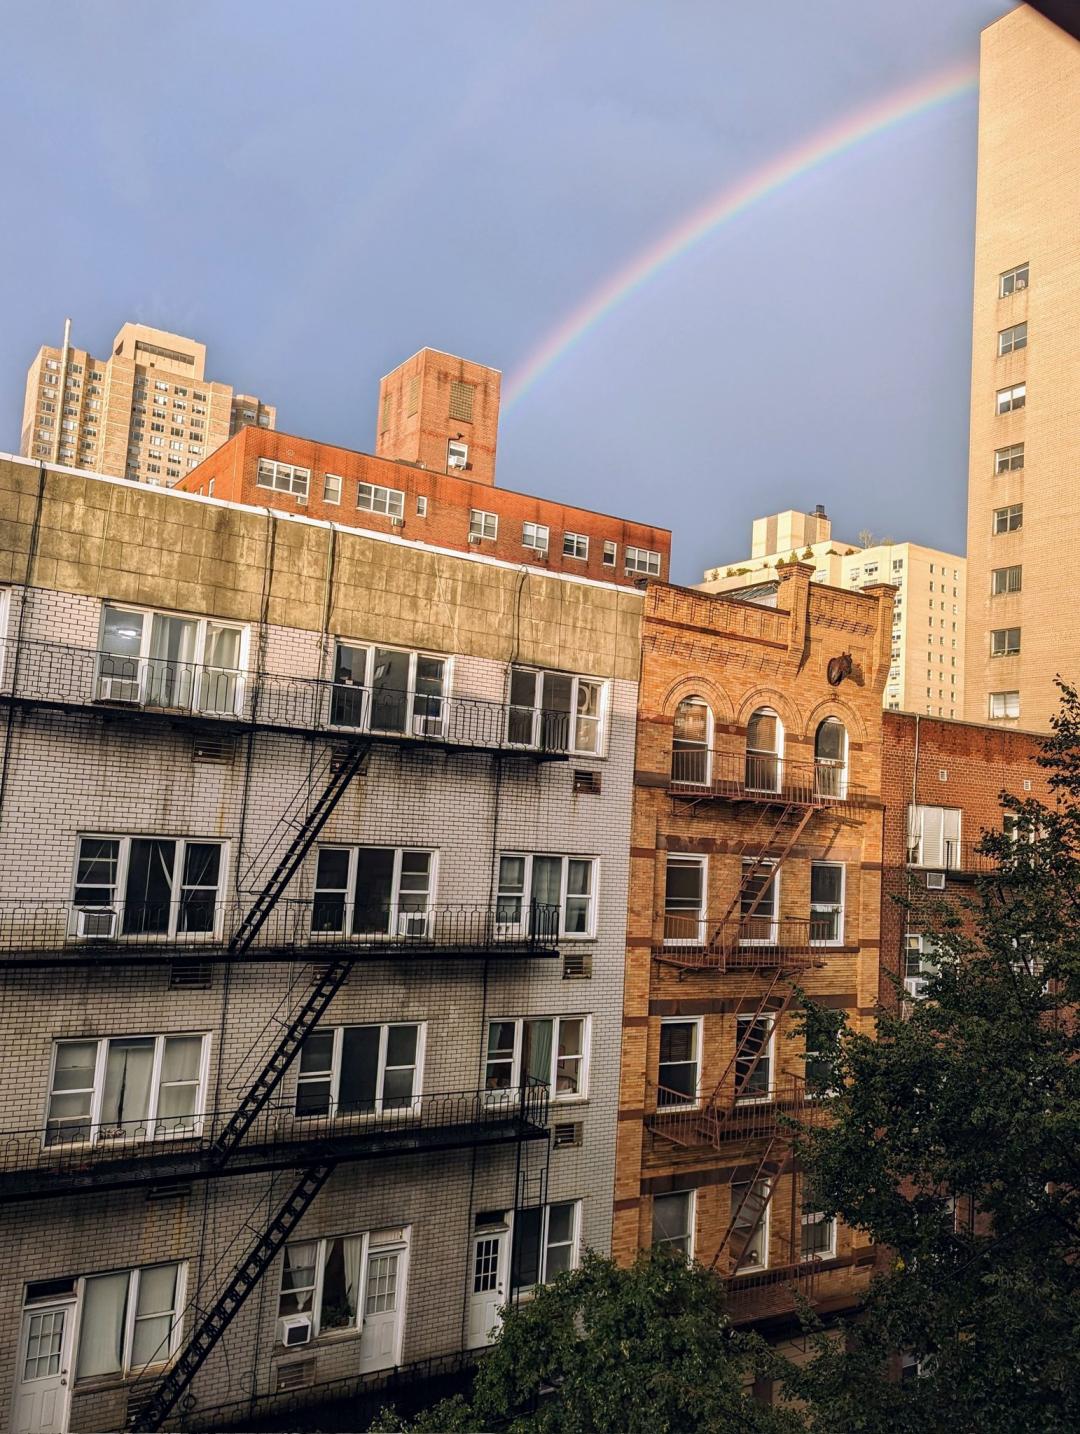 A rainbow over NYC apartment buildings.